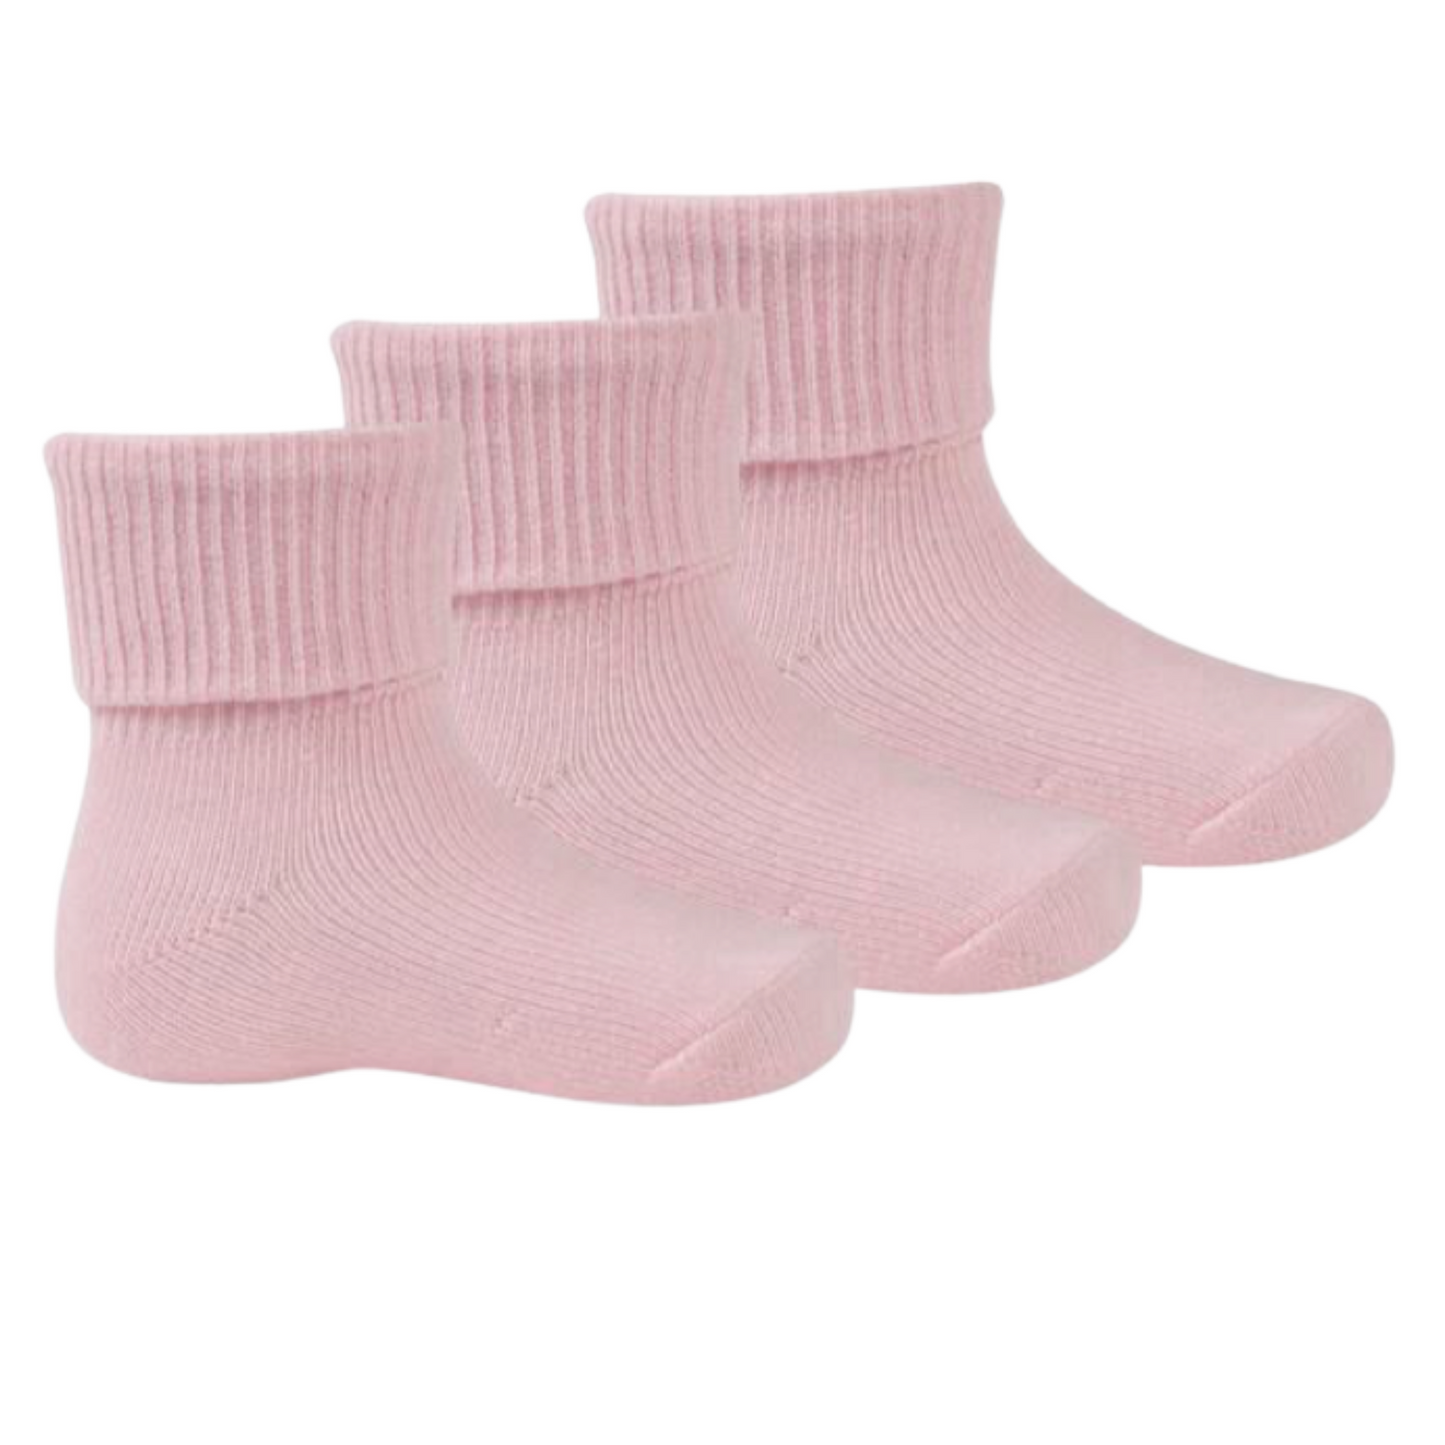 Pink Ankle Socks - 3 Pack